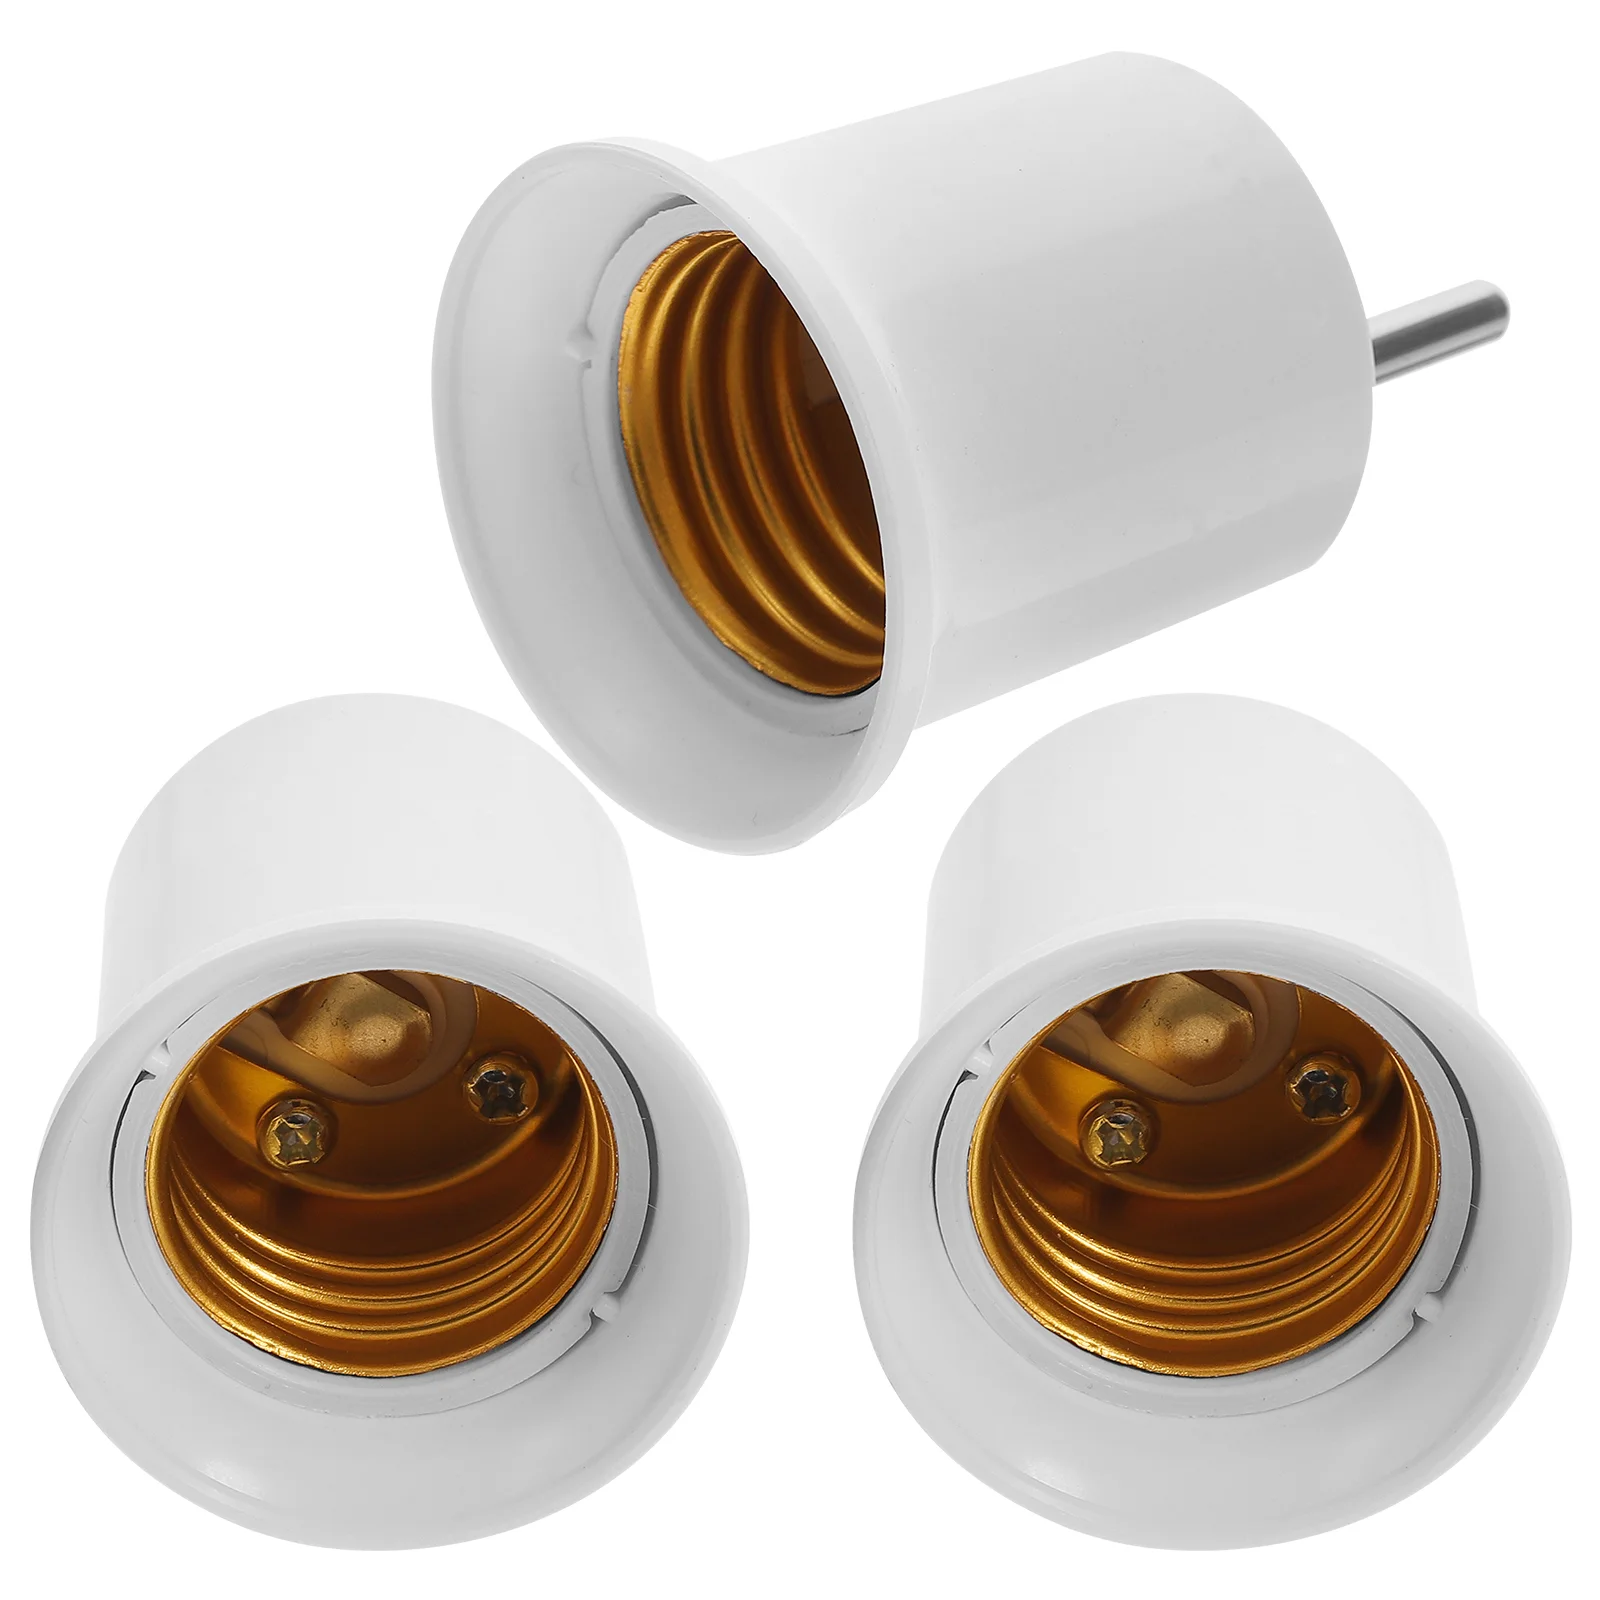 

3 Pcs E26 Conversion Socket Light Bulb Base Adapter Wall Bulbs Plug in Abs Lamp Holder